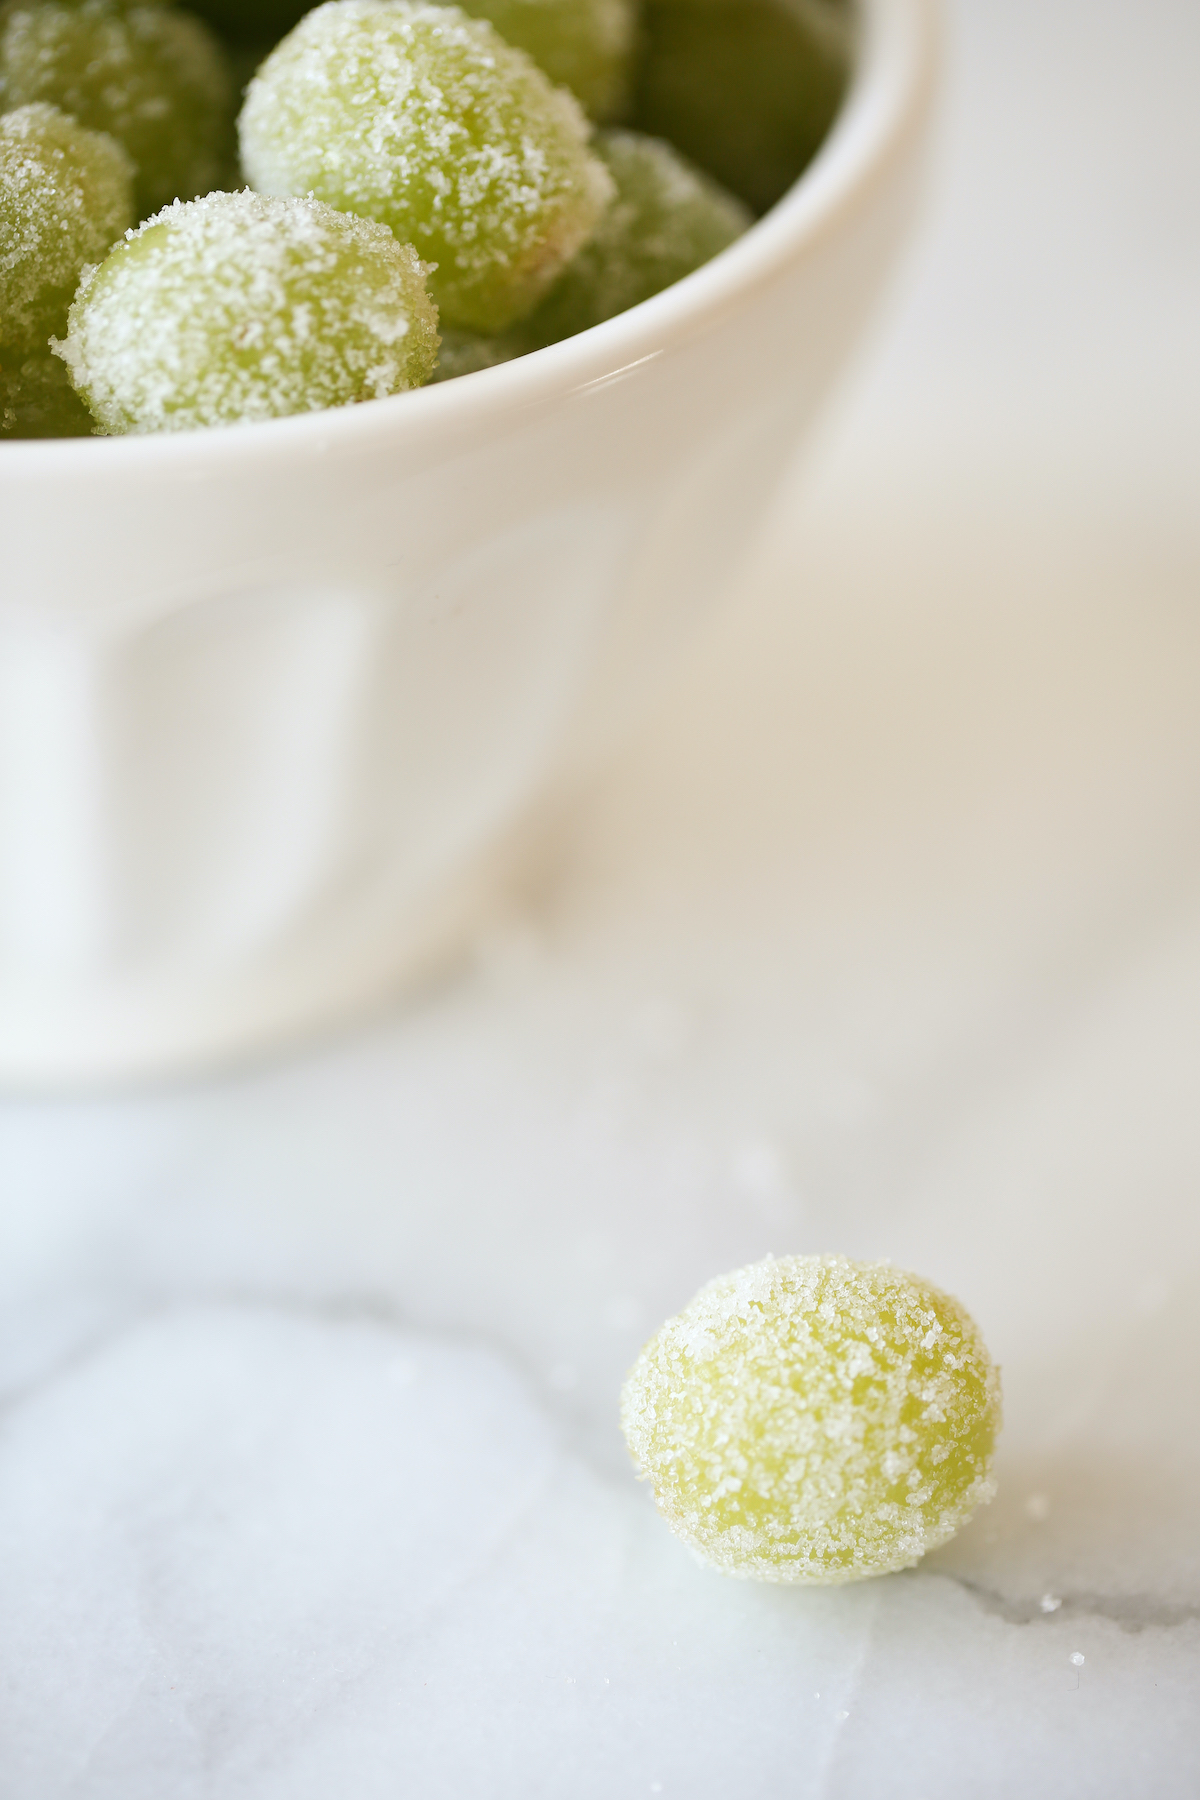 A white bowl of green sugared champagne grapes.